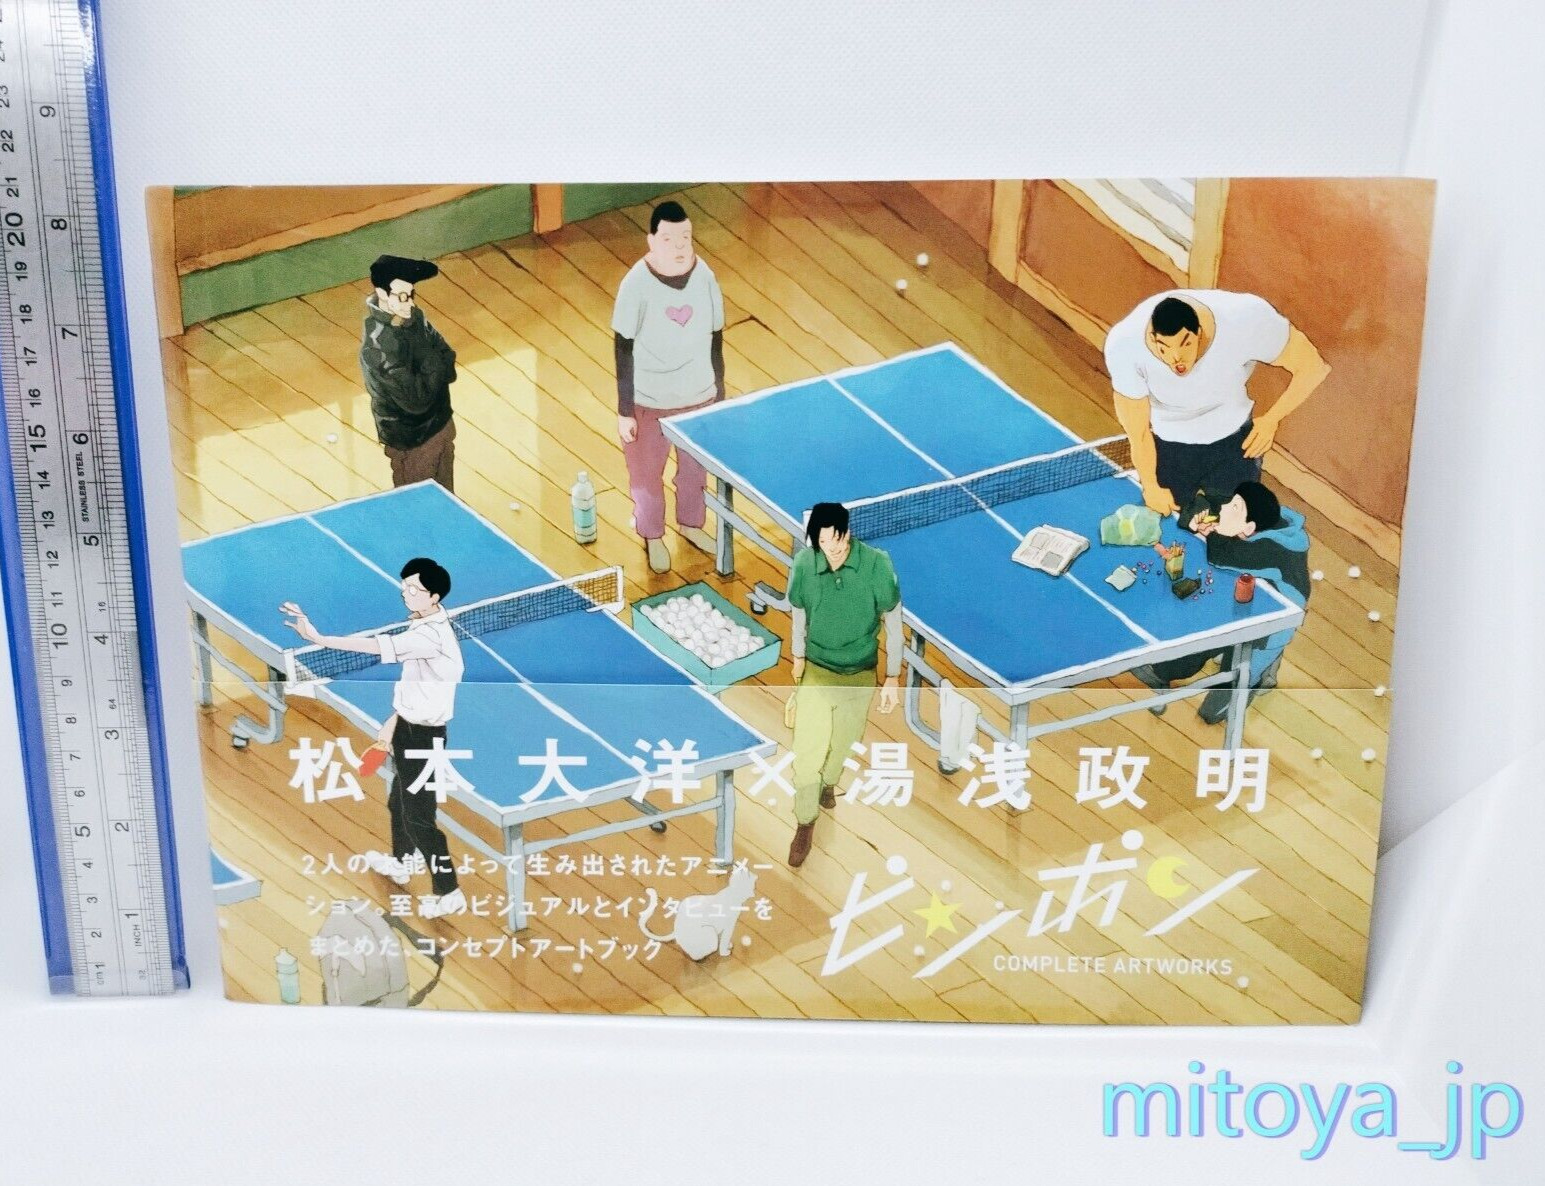 2014 Ping Pong TV Anime Complete Art Works Concept Art Book Taiyo Matsumoto